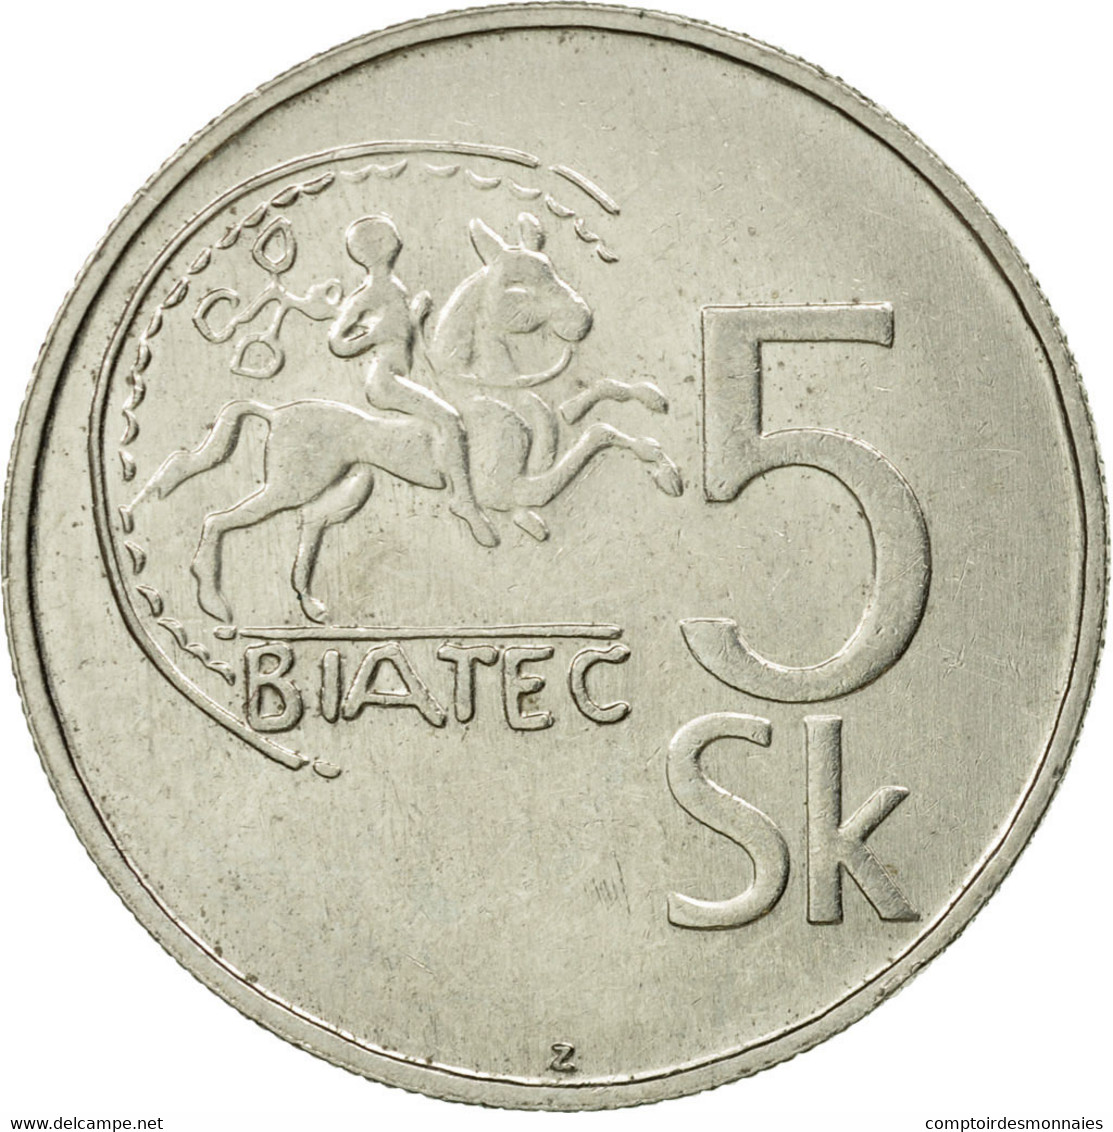 Monnaie, Slovaquie, 5 Koruna, 1995, TTB, Nickel Plated Steel, KM:14 - Slovaquie